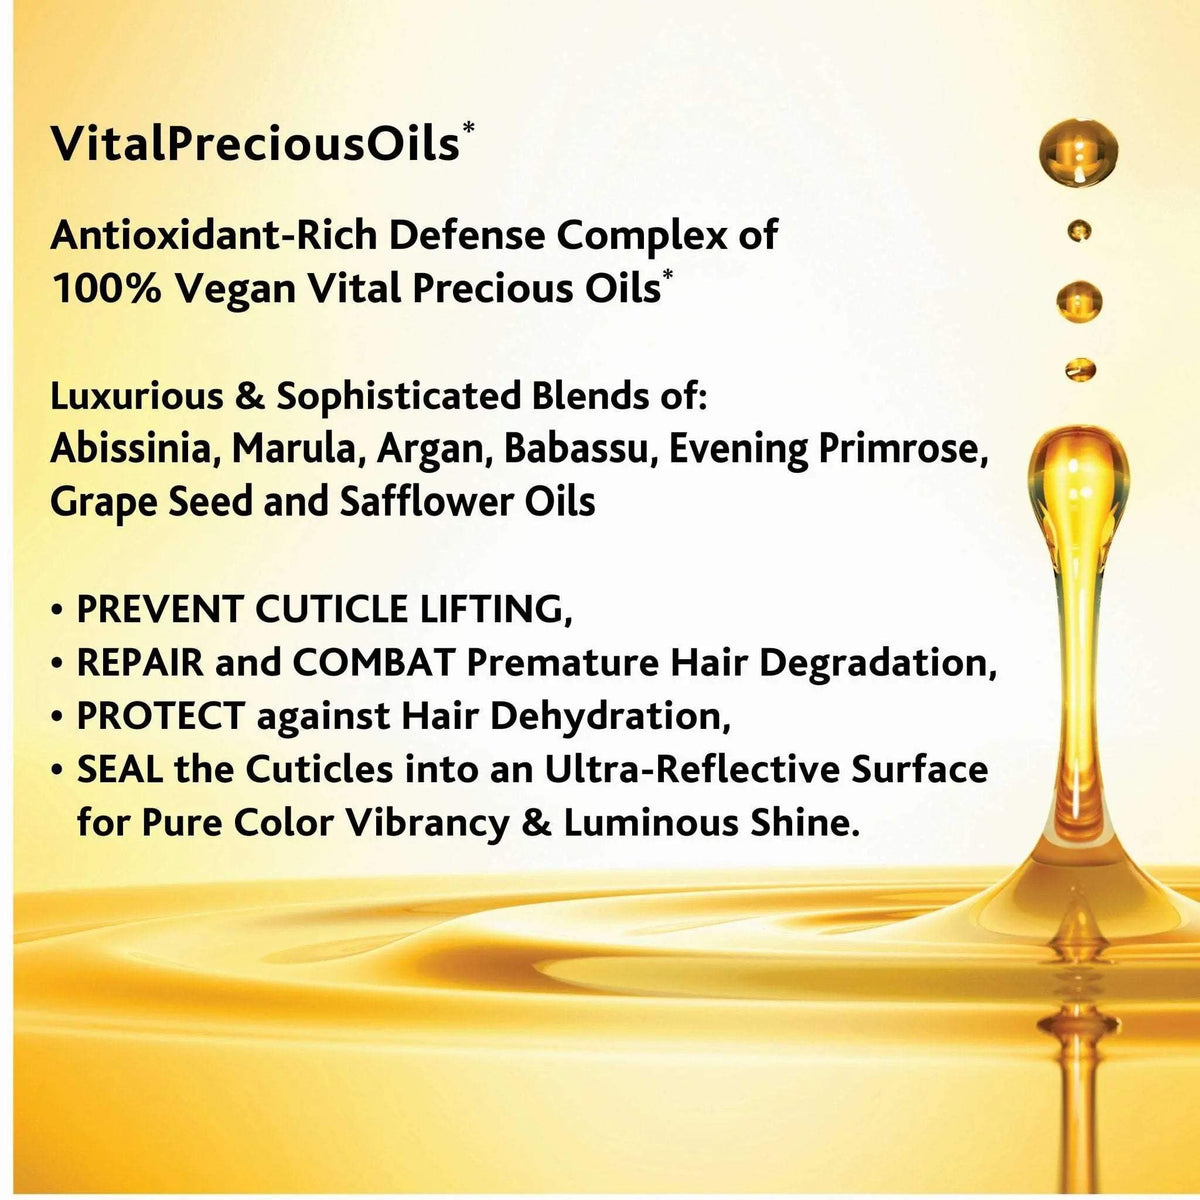 PROCURE Colour Protect Defense Hair Oil - 45 Capsules - SNOBGIRLS.com